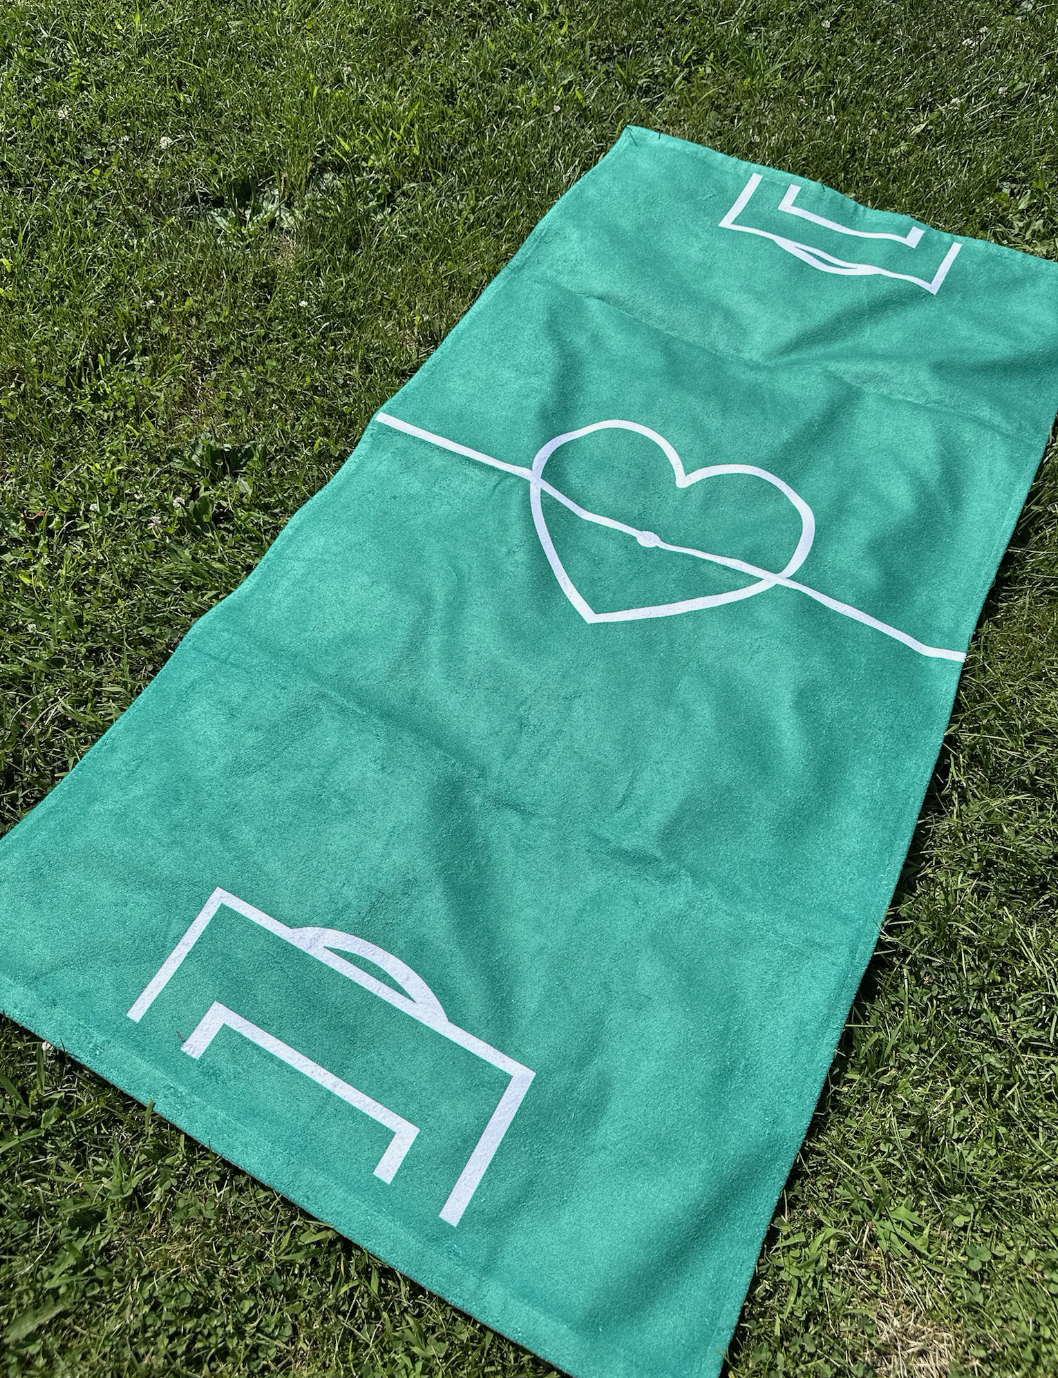 Soccer Field Beach Towel